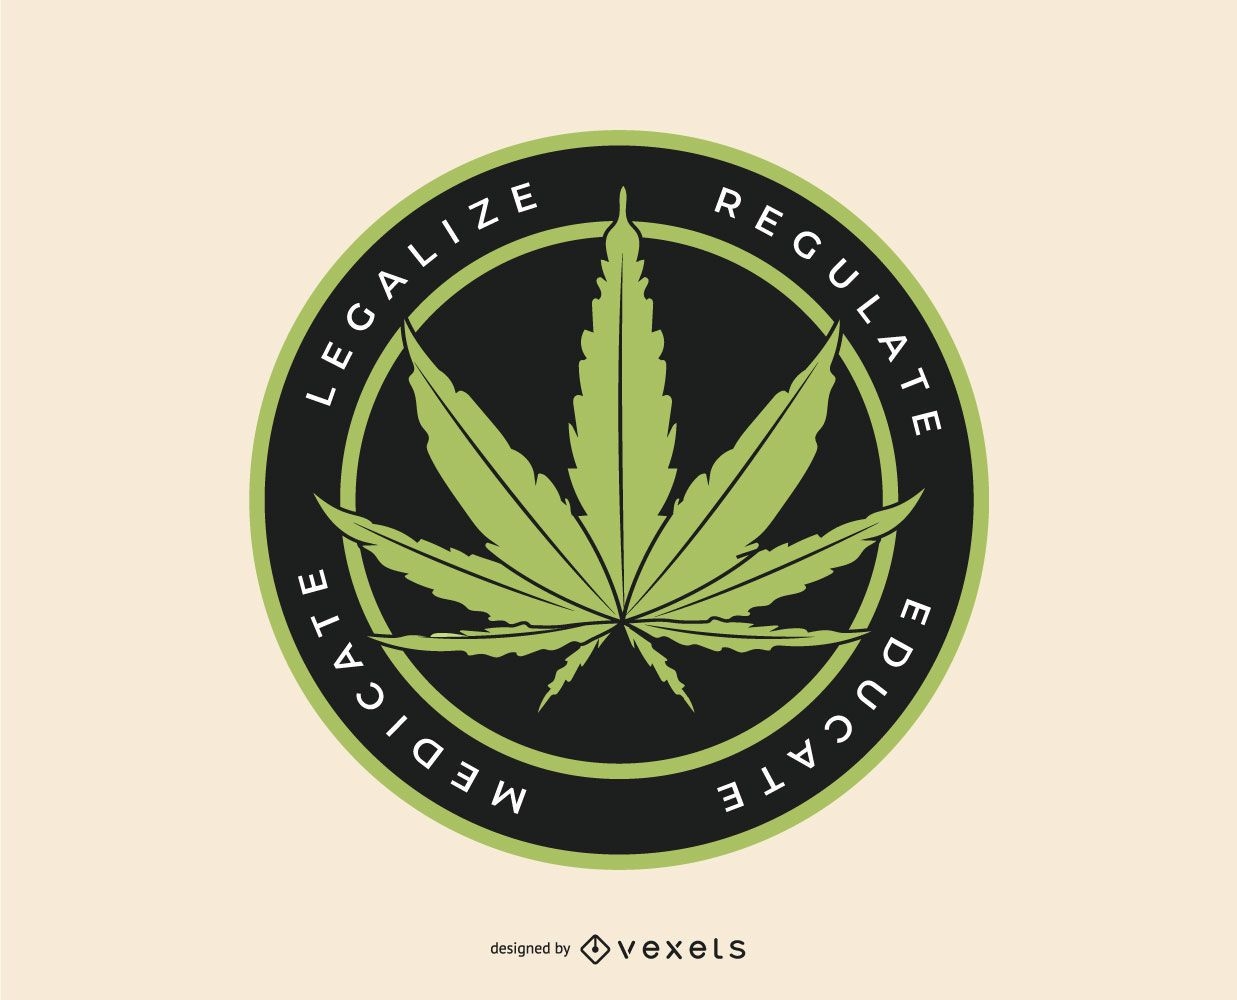 Marihuana-Logo-Vorlage